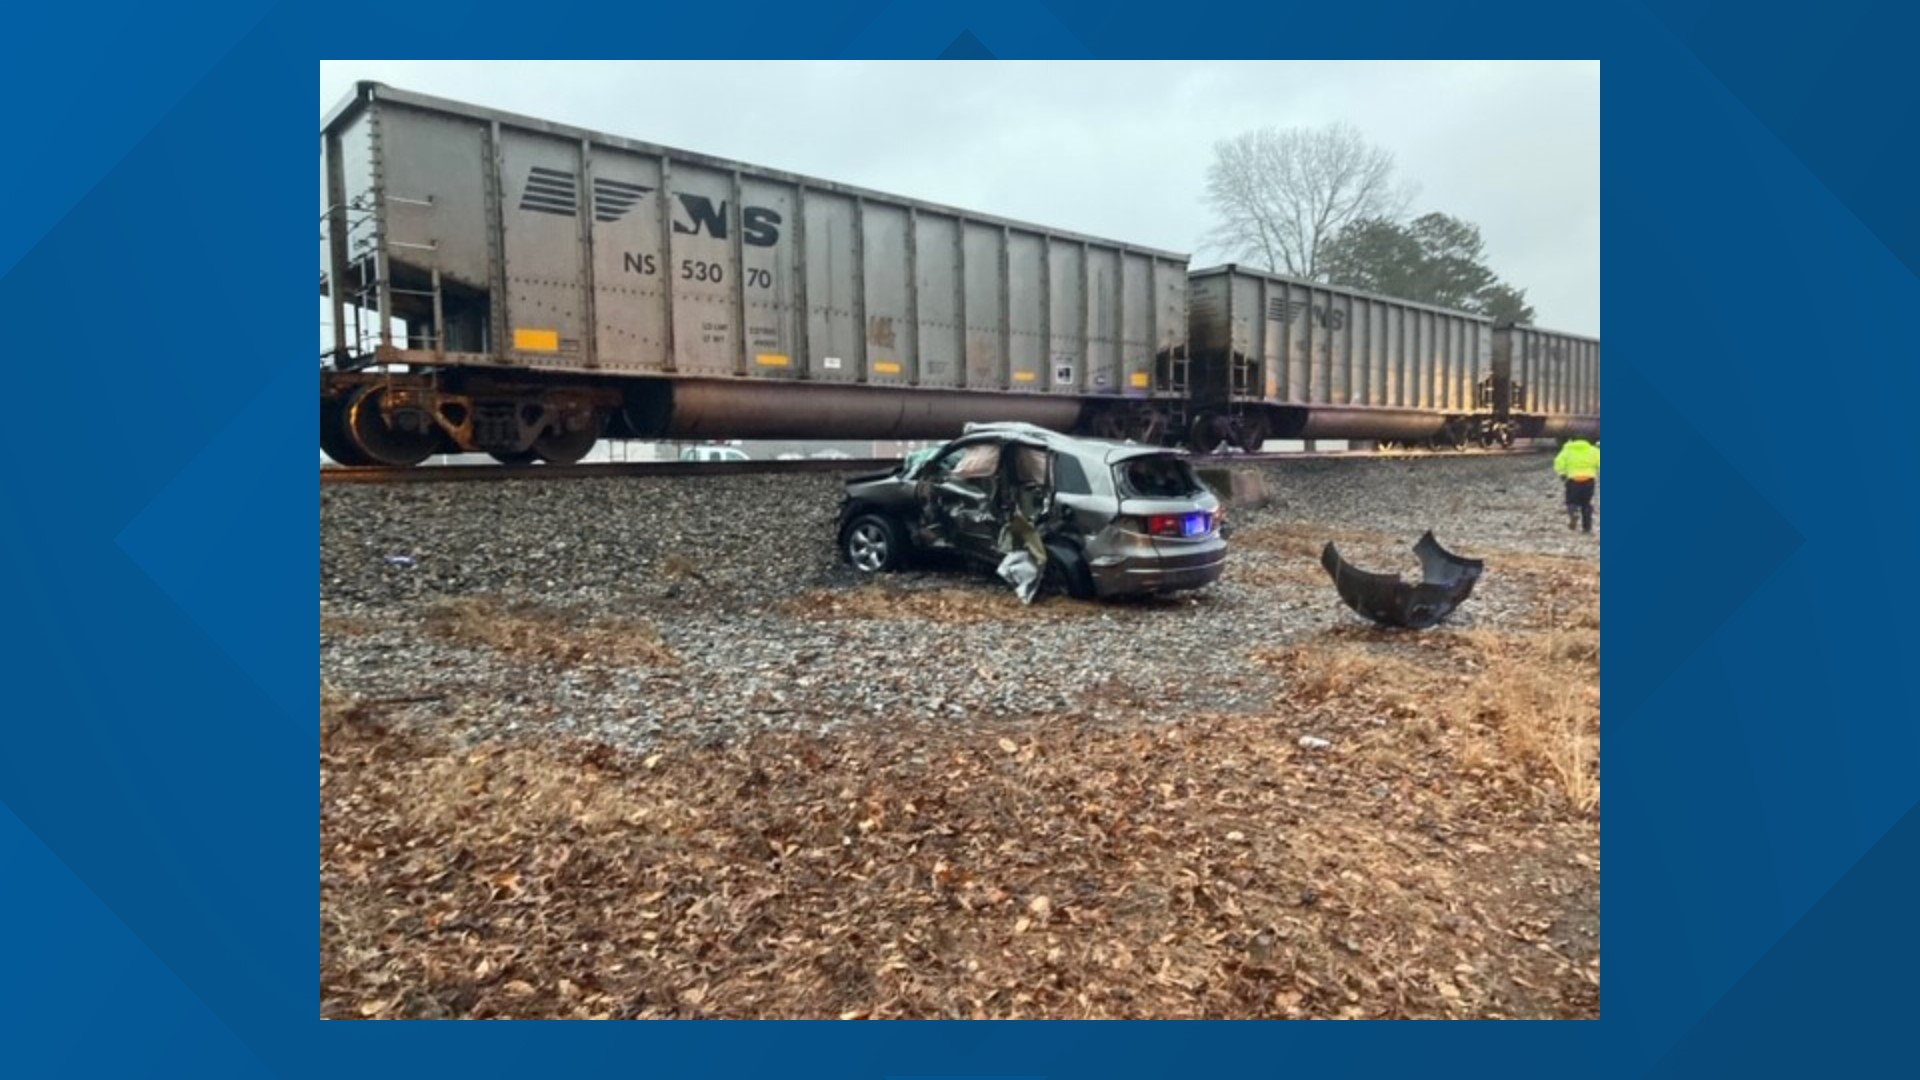 Train hits car that stalled on train tracks